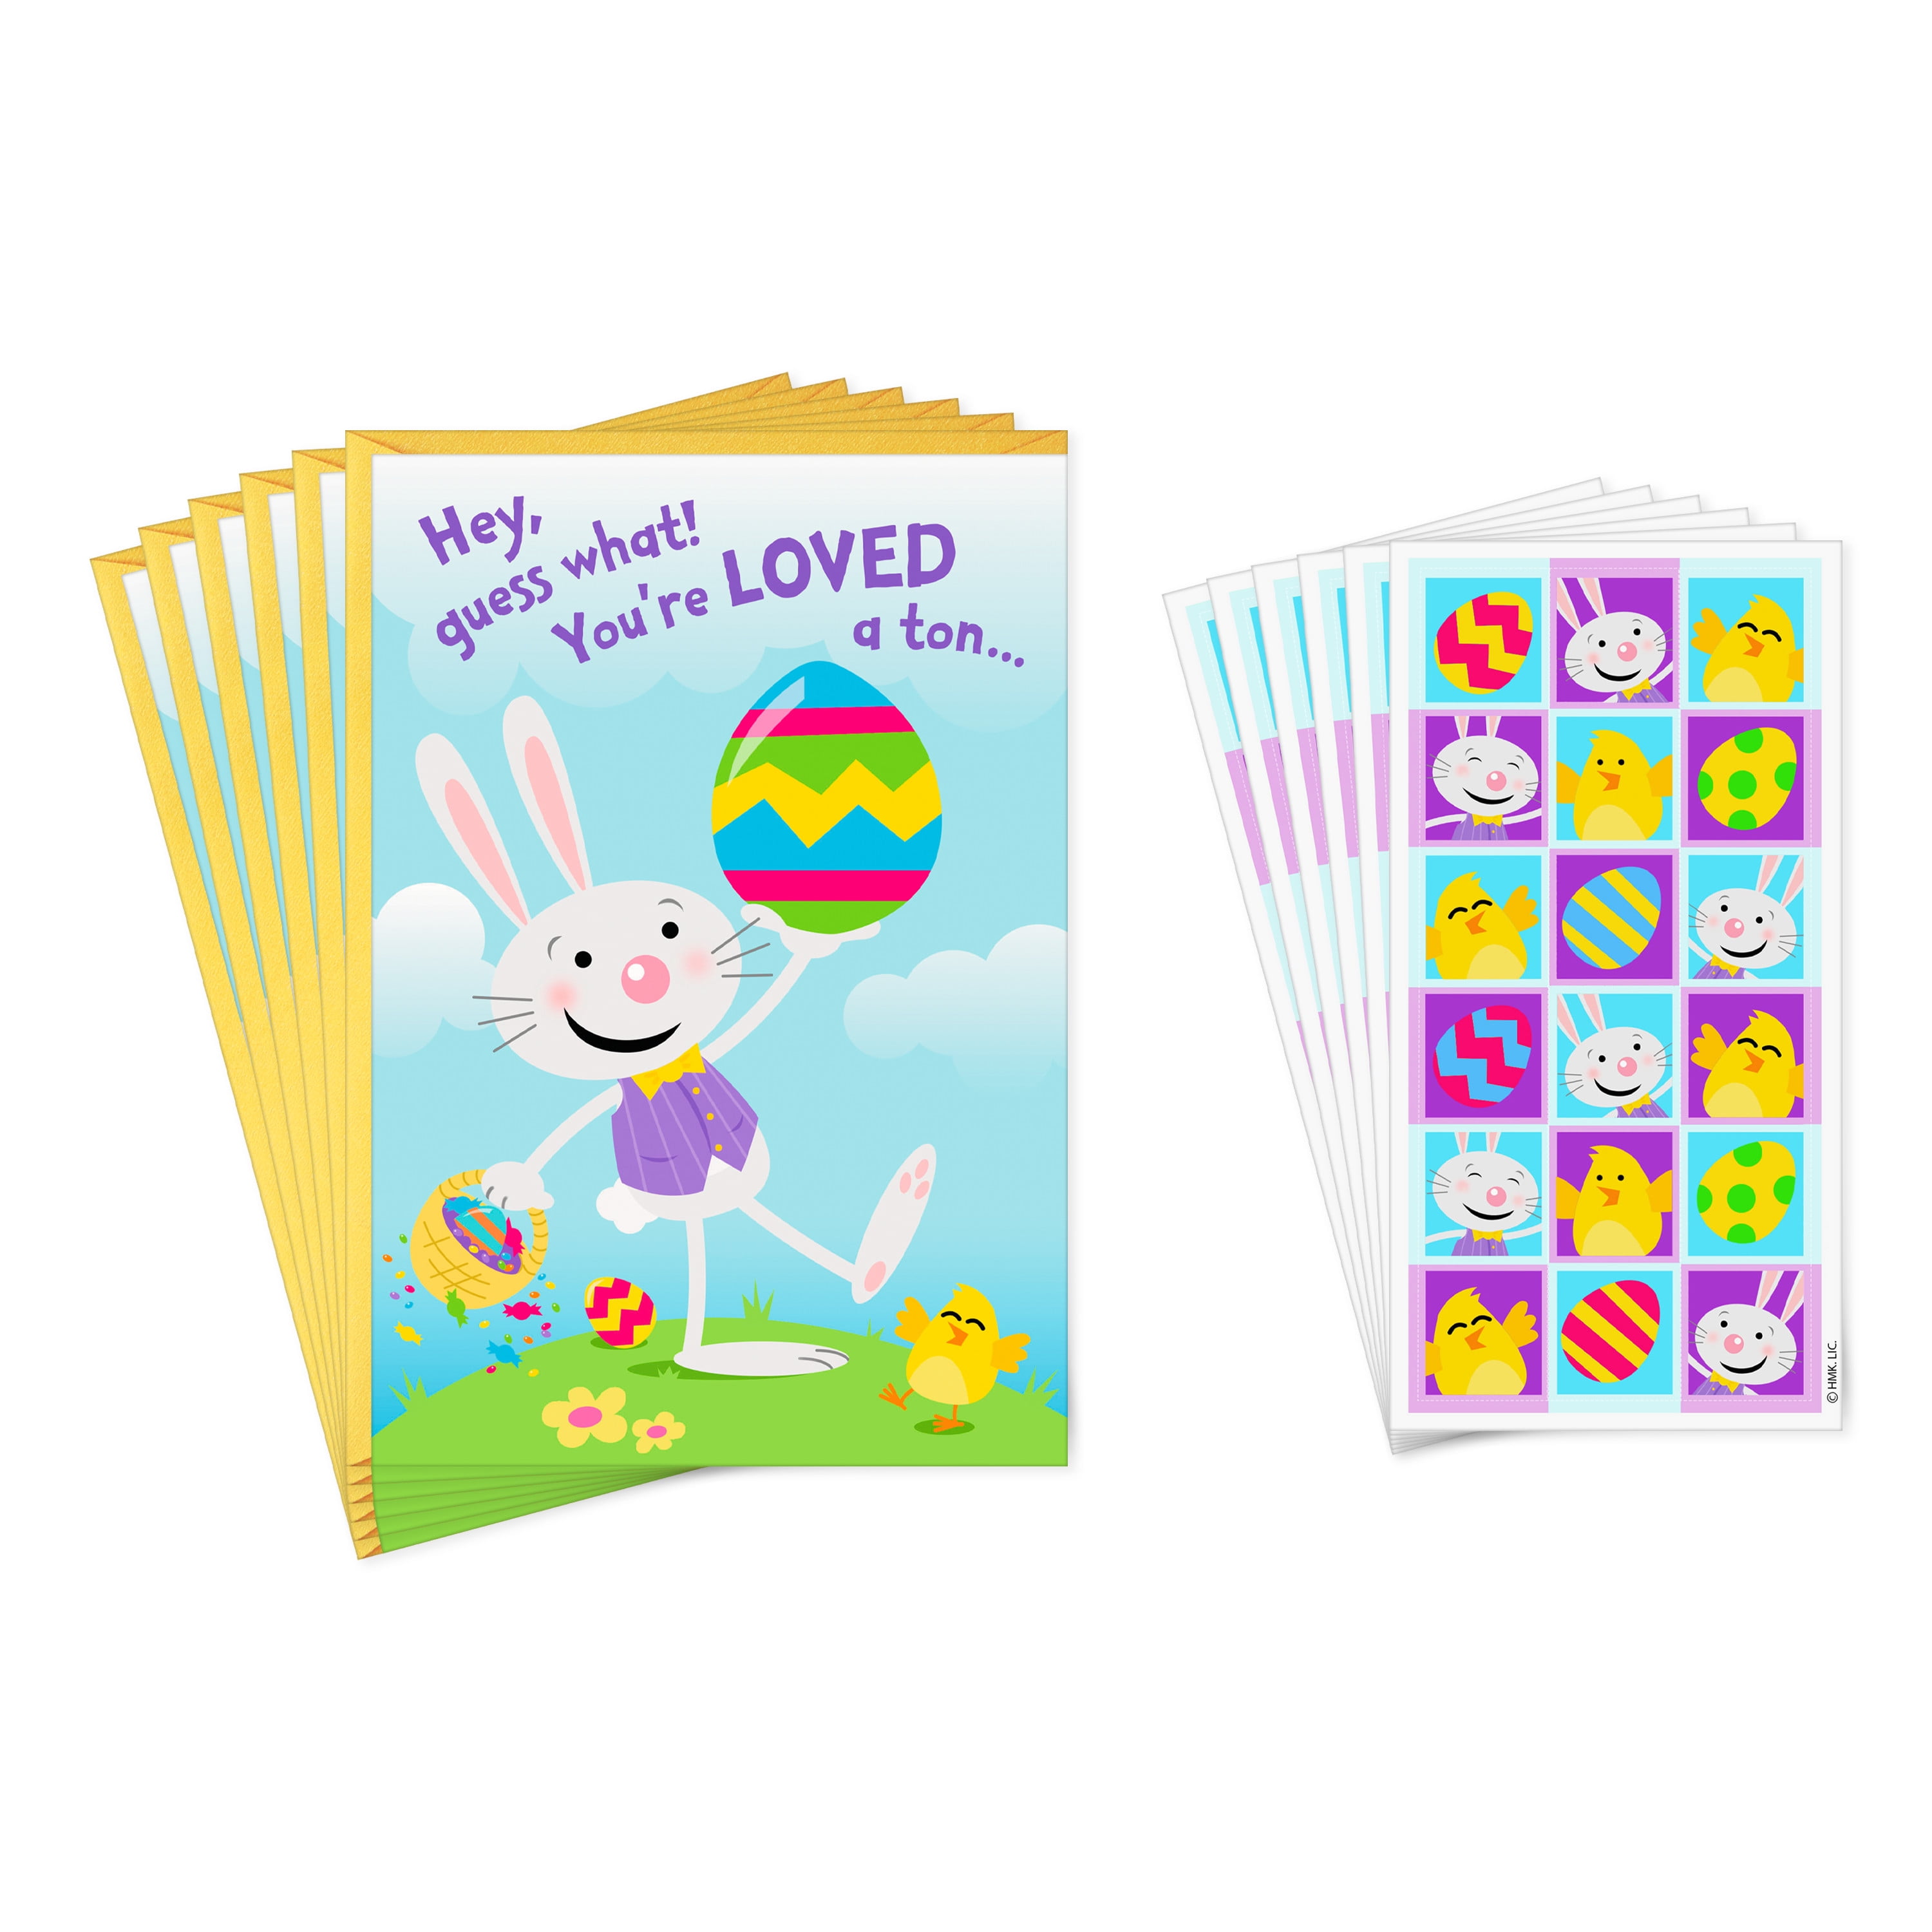 Træde tilbage Stadion privat Hallmark Pack of Easter Cards for Kids with Stickers, Loved a Ton (6 Cards  with Envelopes) - Walmart.com